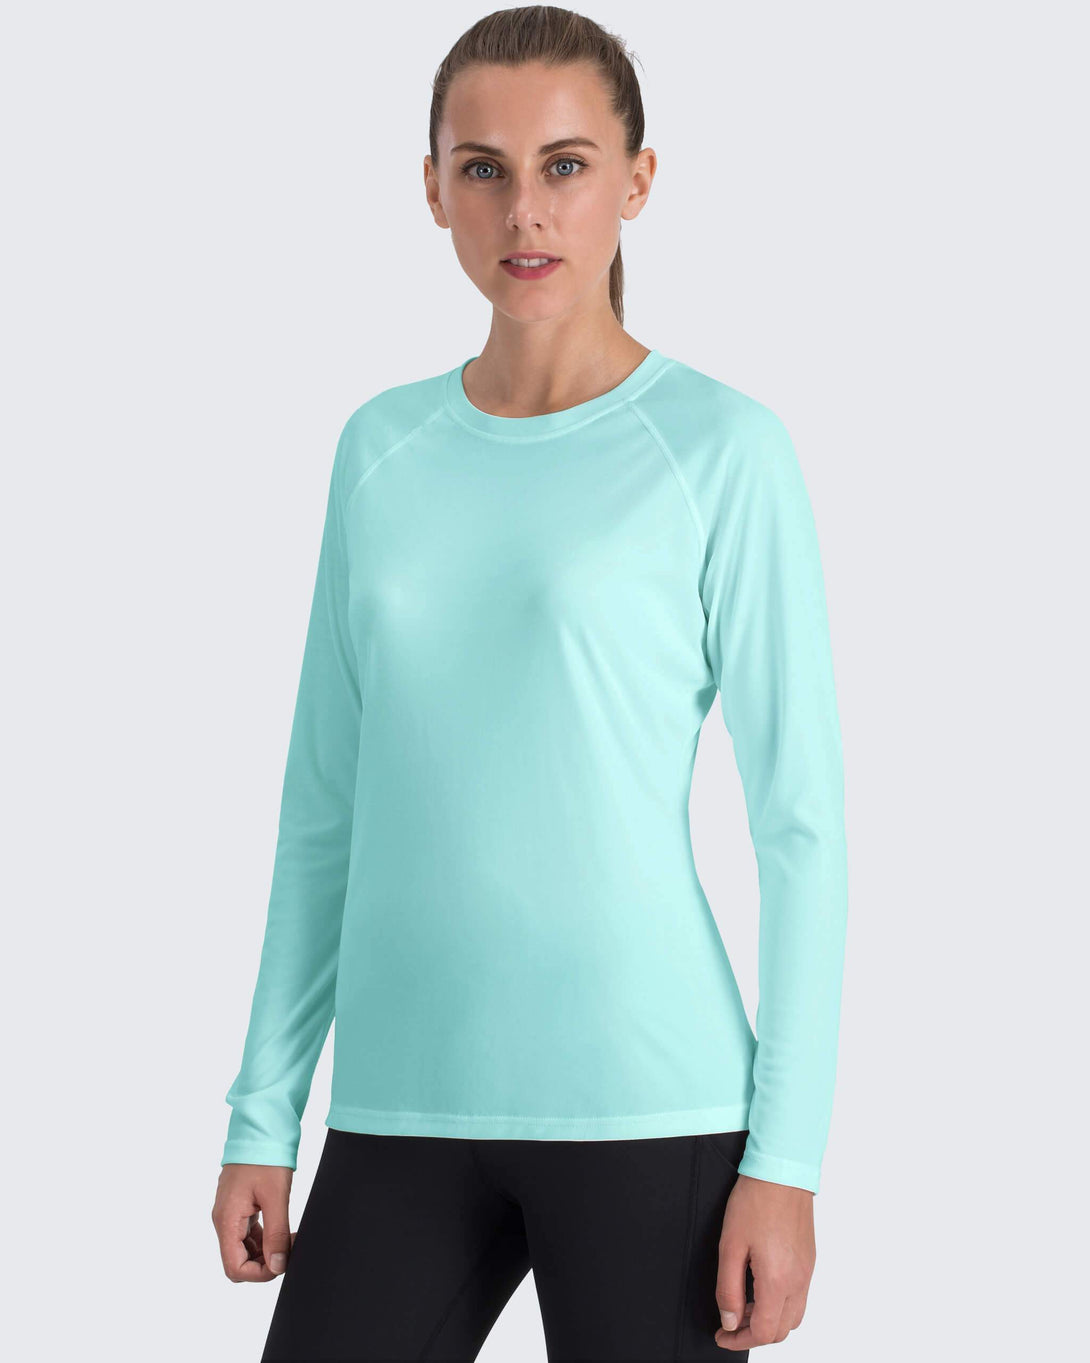 adviicd Tank Tops Women Women's Sun Shirts UPF 50 UV Protection Long Sleeve  Tees Quick Dry Lightweight Workout Swim Rash Guard T-Shirts Green XL 